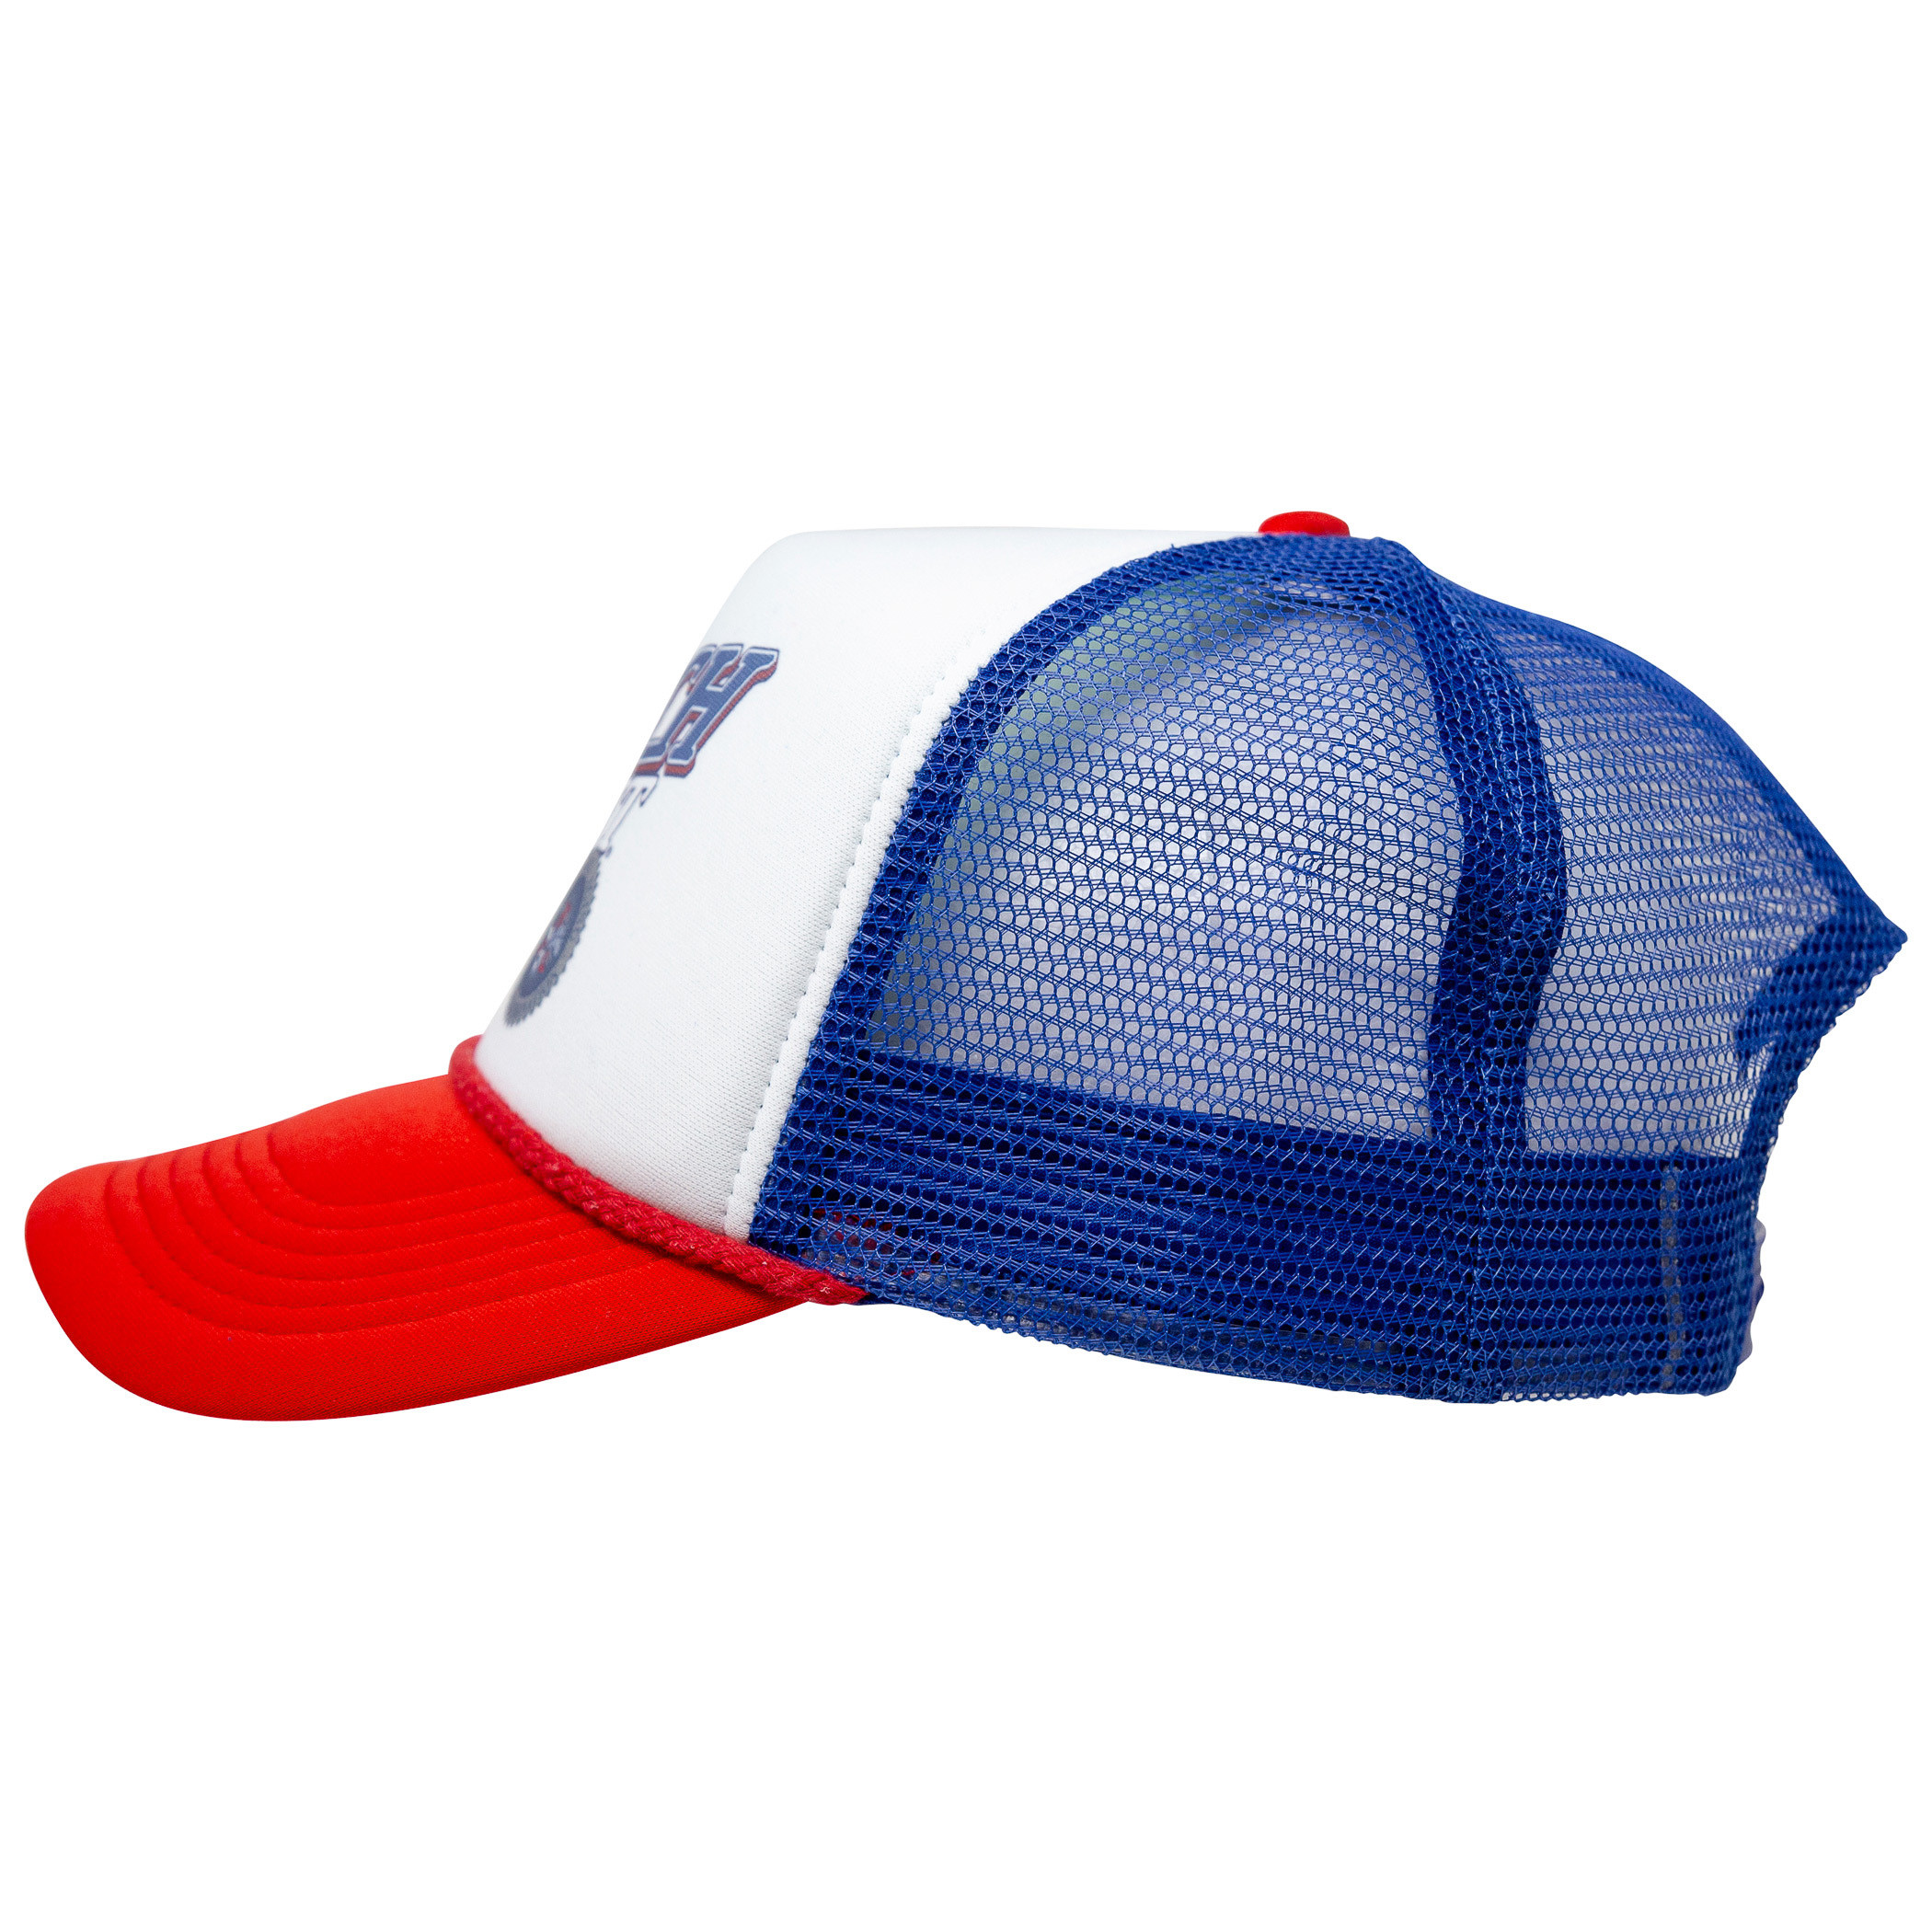 Busch Light Beer Logo Red, White, and Blue Adjustable Snapback Mesh Trucker Hat